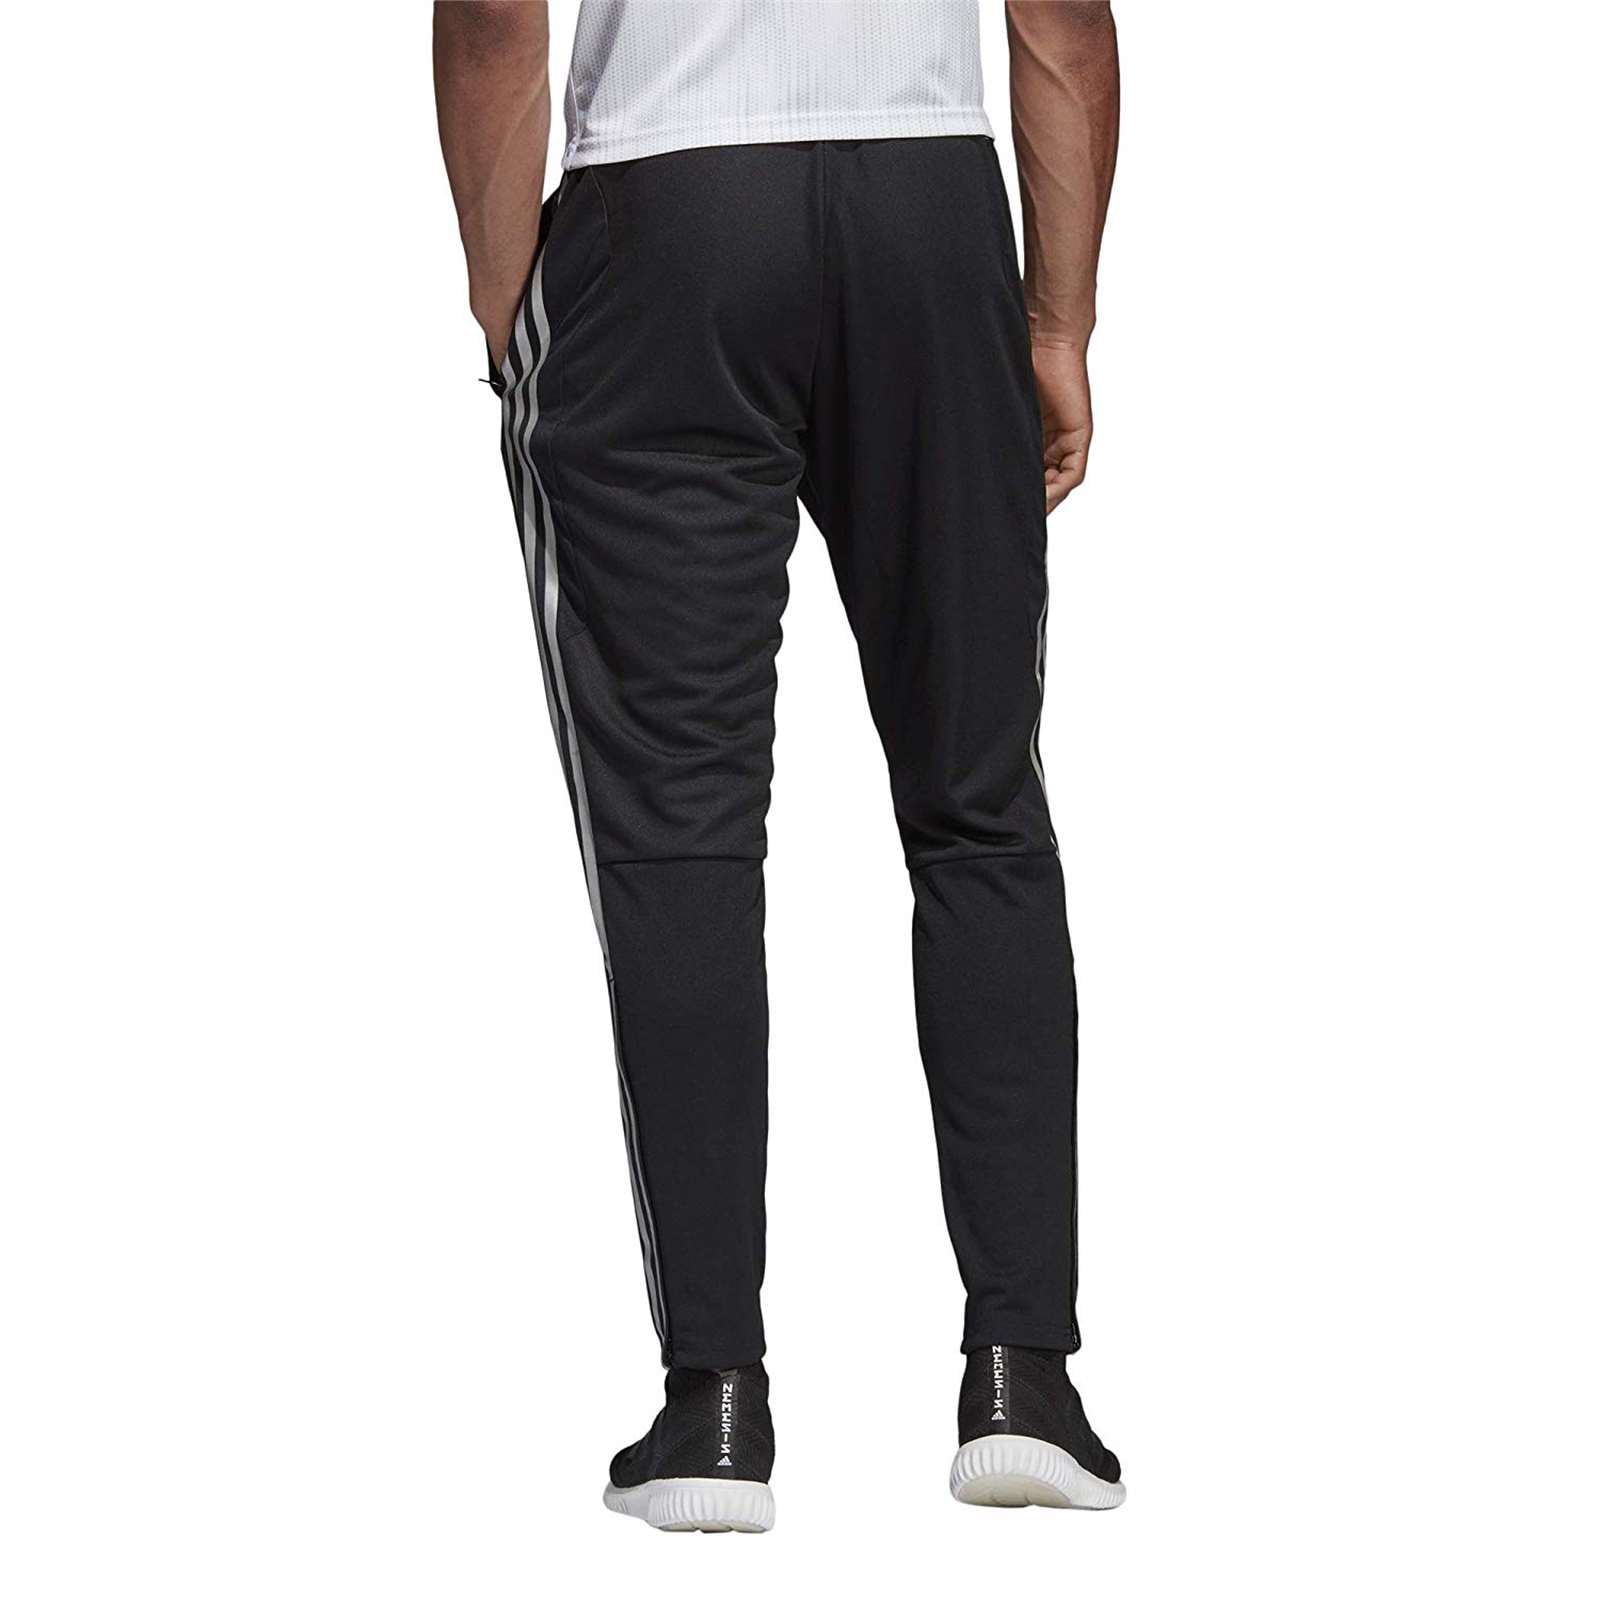 ficción agrio Aceptado New Adidas Tiro 19 Climacool Men's Athletic Workout Training Slim Fit Pants  - Walmart.com